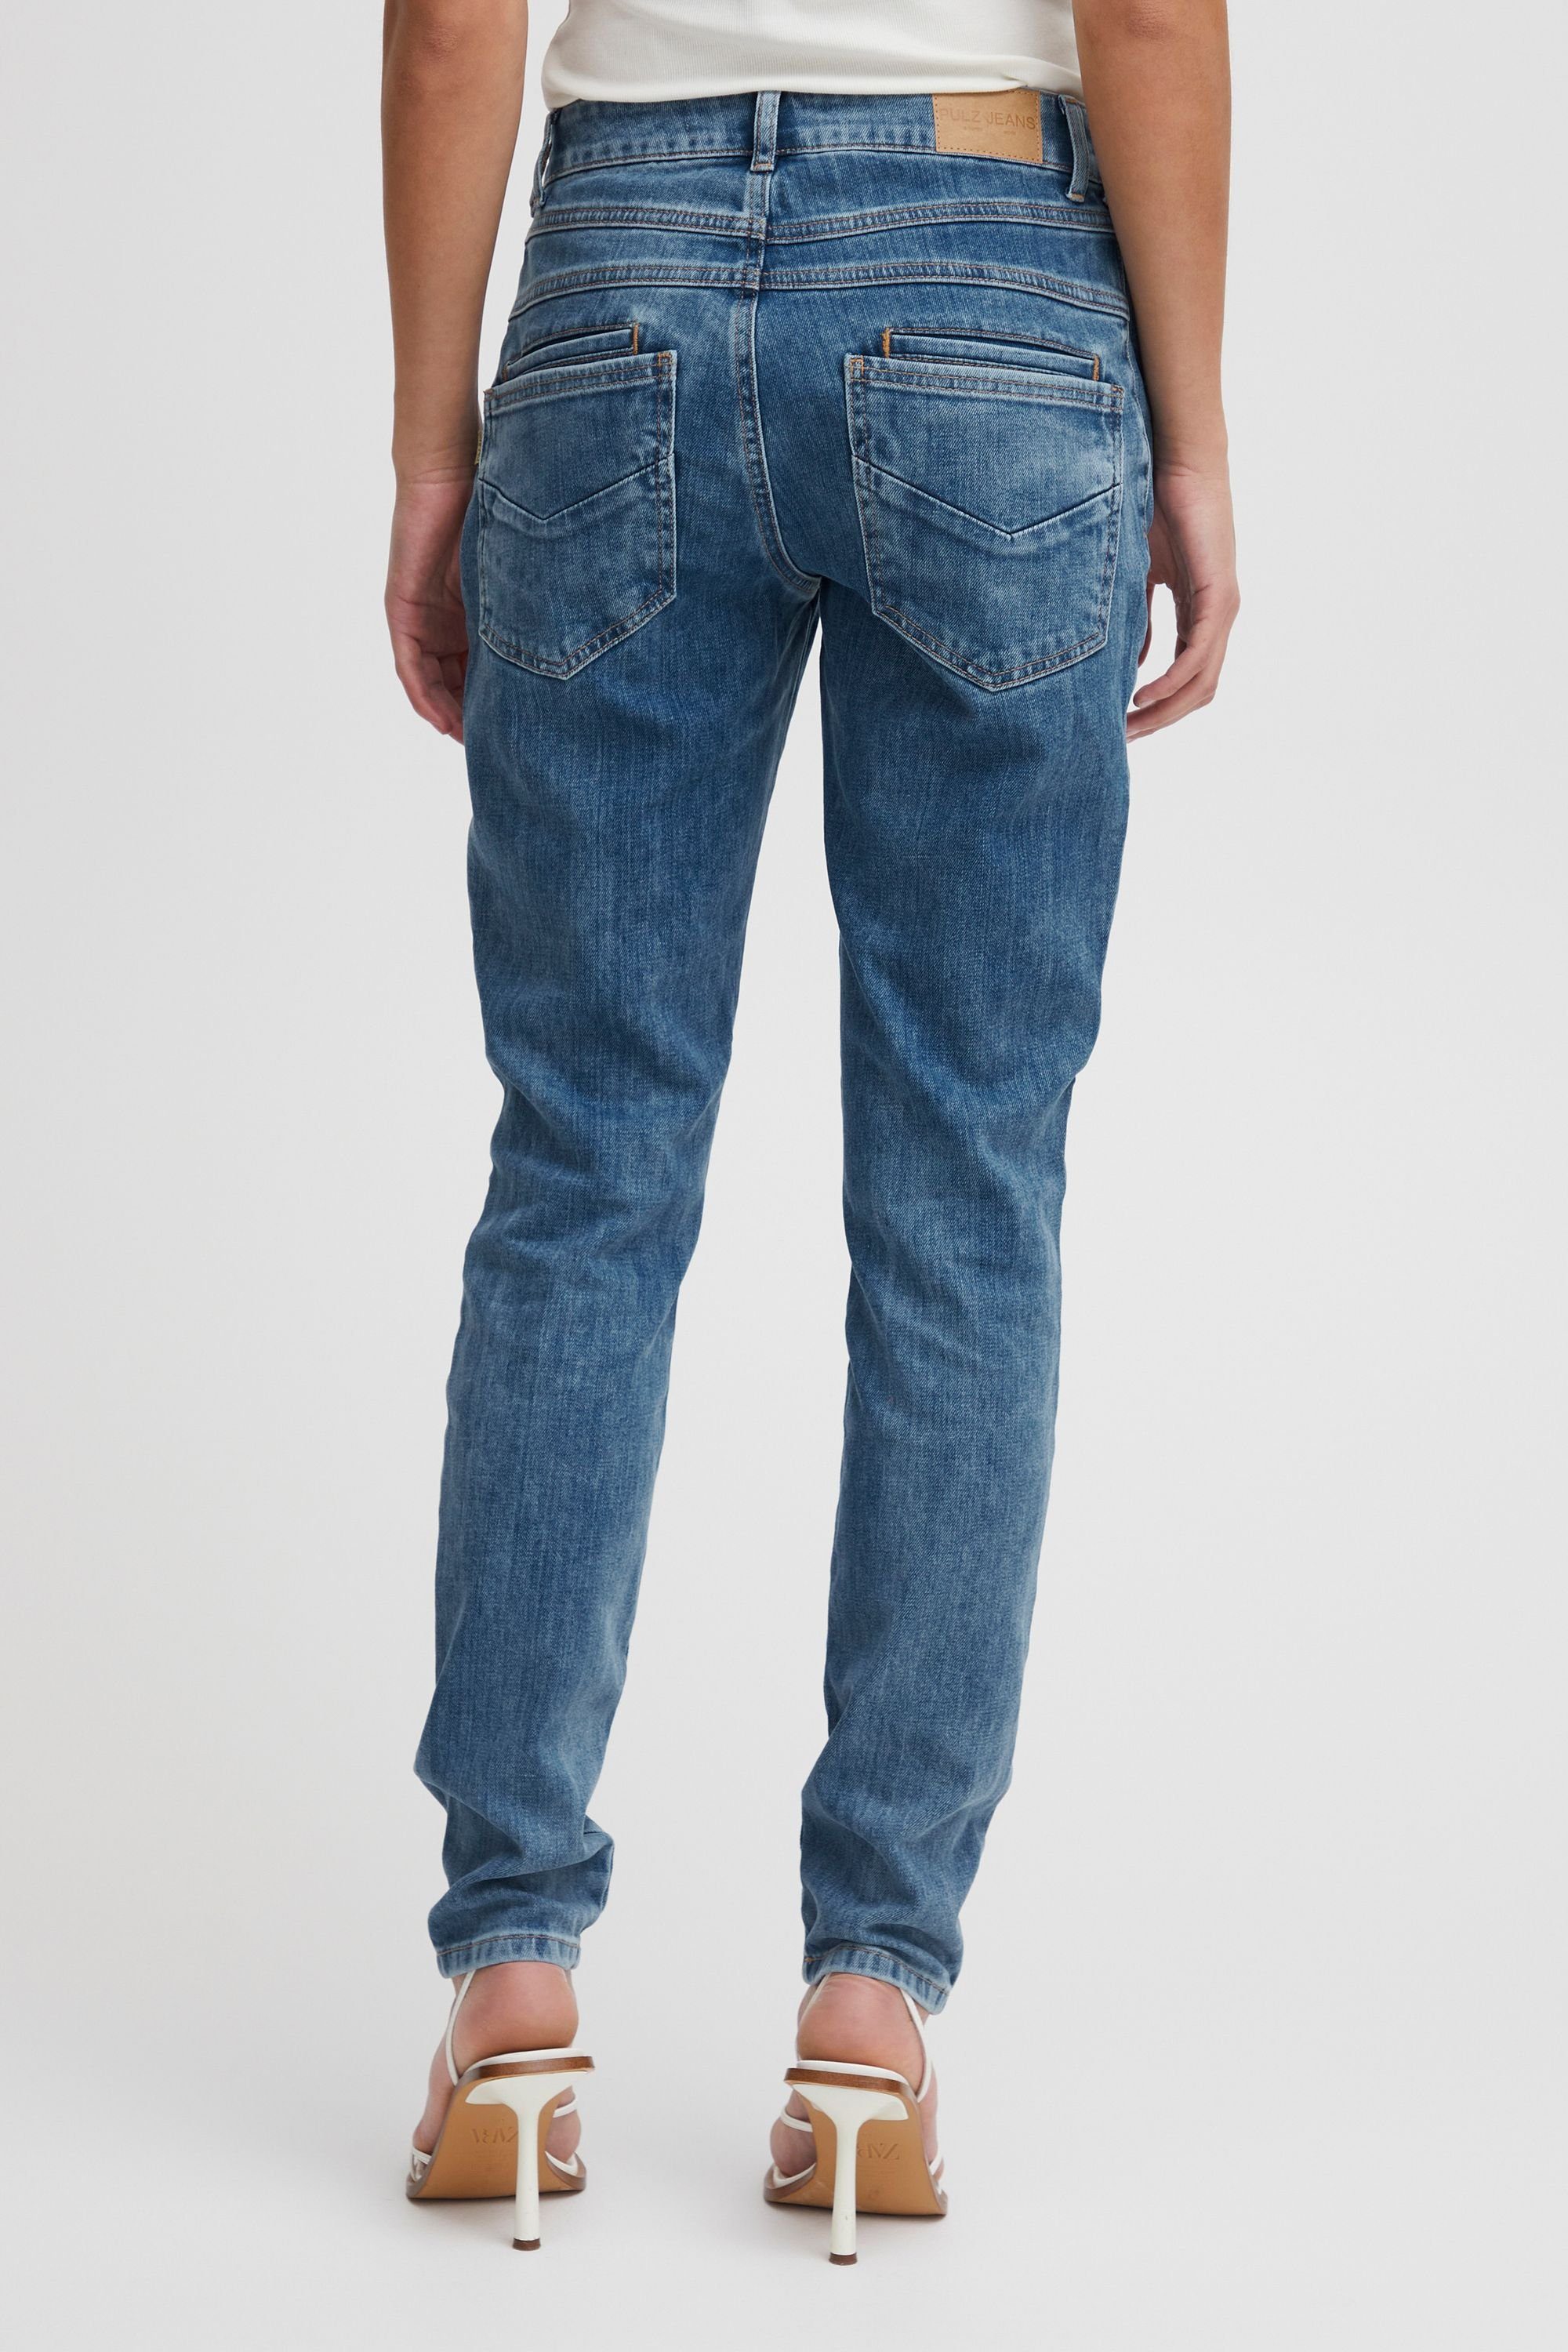 5-Pocket-Jeans Leg Pulz denim Skinny blue Jeans Loose (200005) Medium PZMELINA Jeans